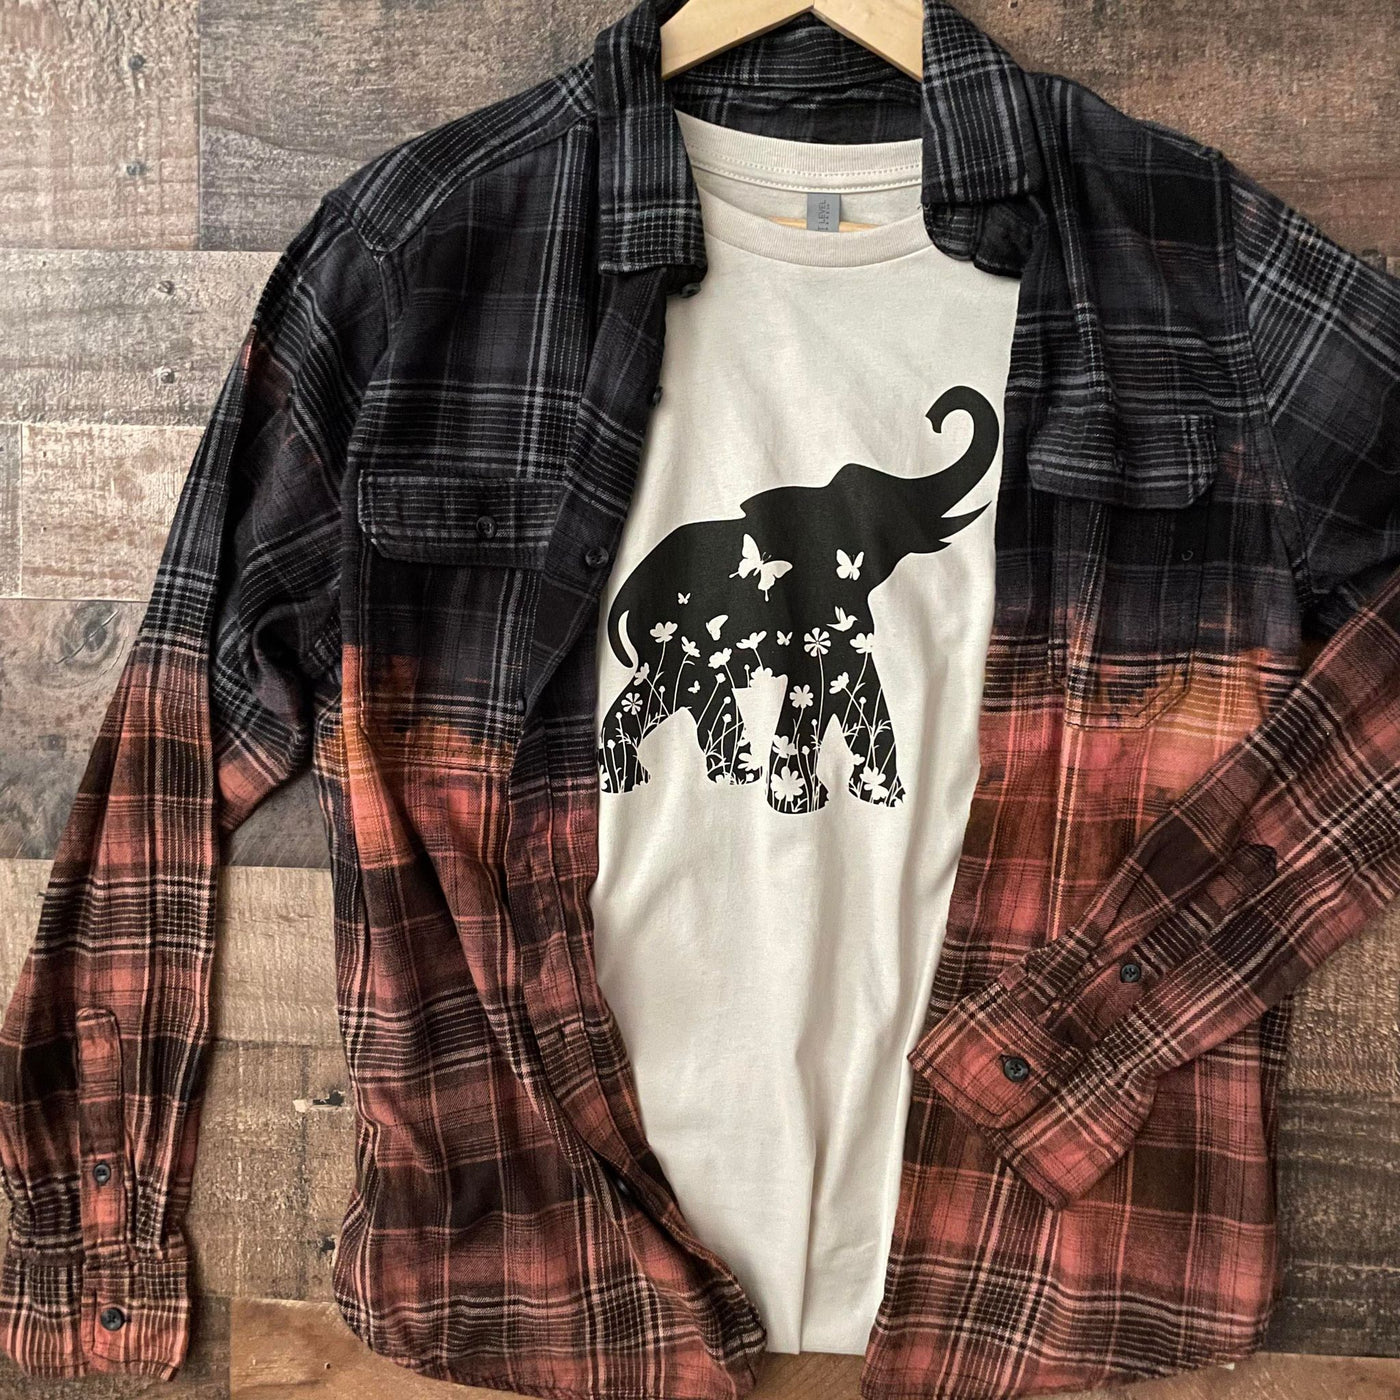 Elephant Garden Friendship Graphic Tee Shirt